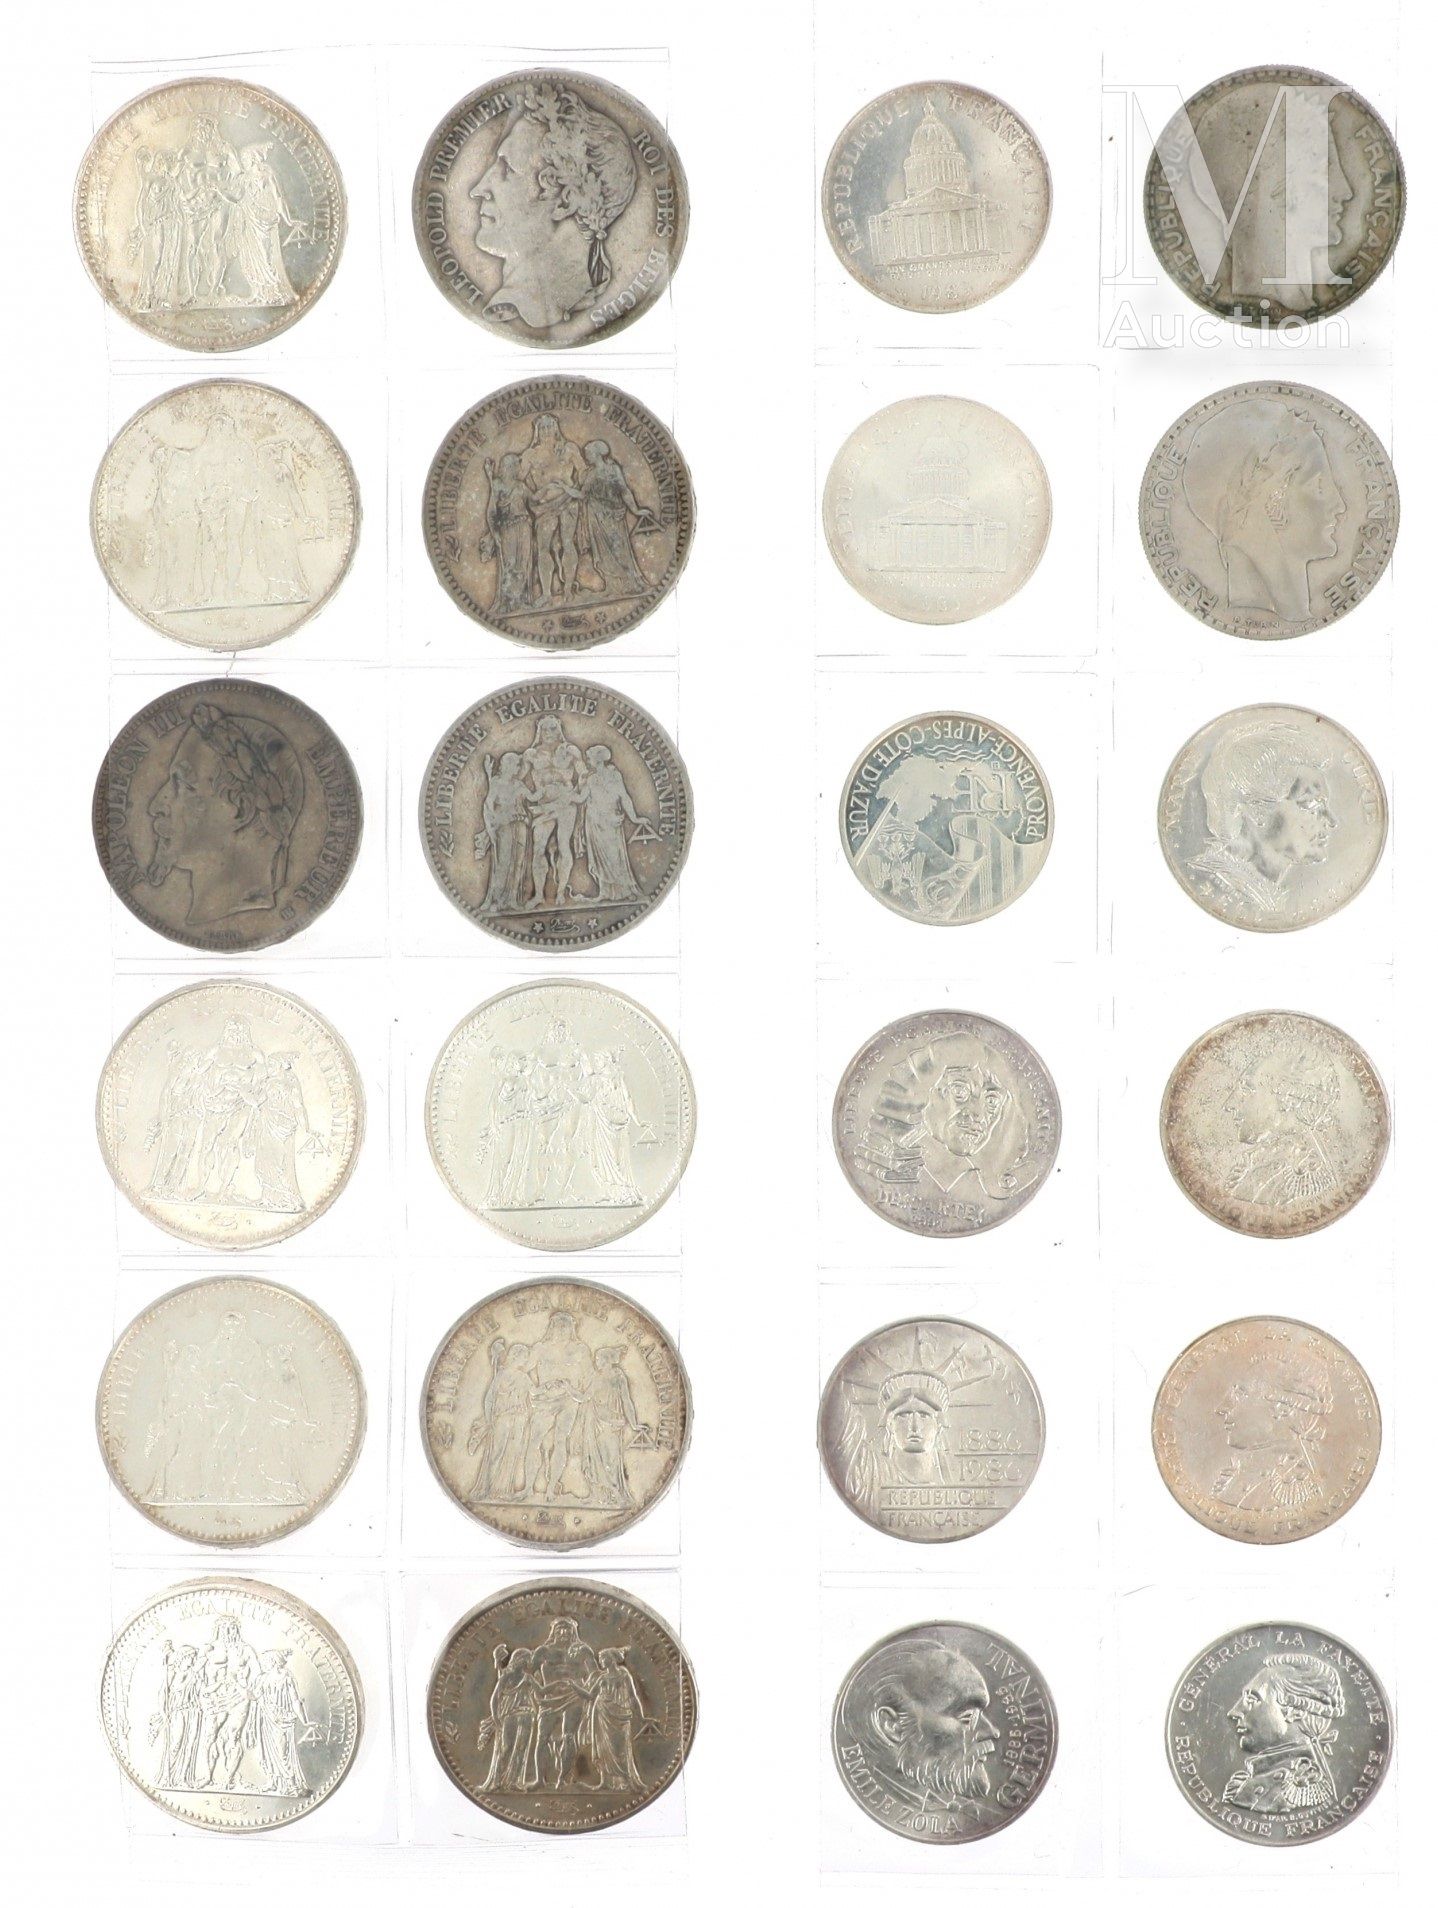 LOT DE PIECES DE MONNAIE EN ARGENT Lot von Silbermünzen, bestehend aus :

- 3 x &hellip;